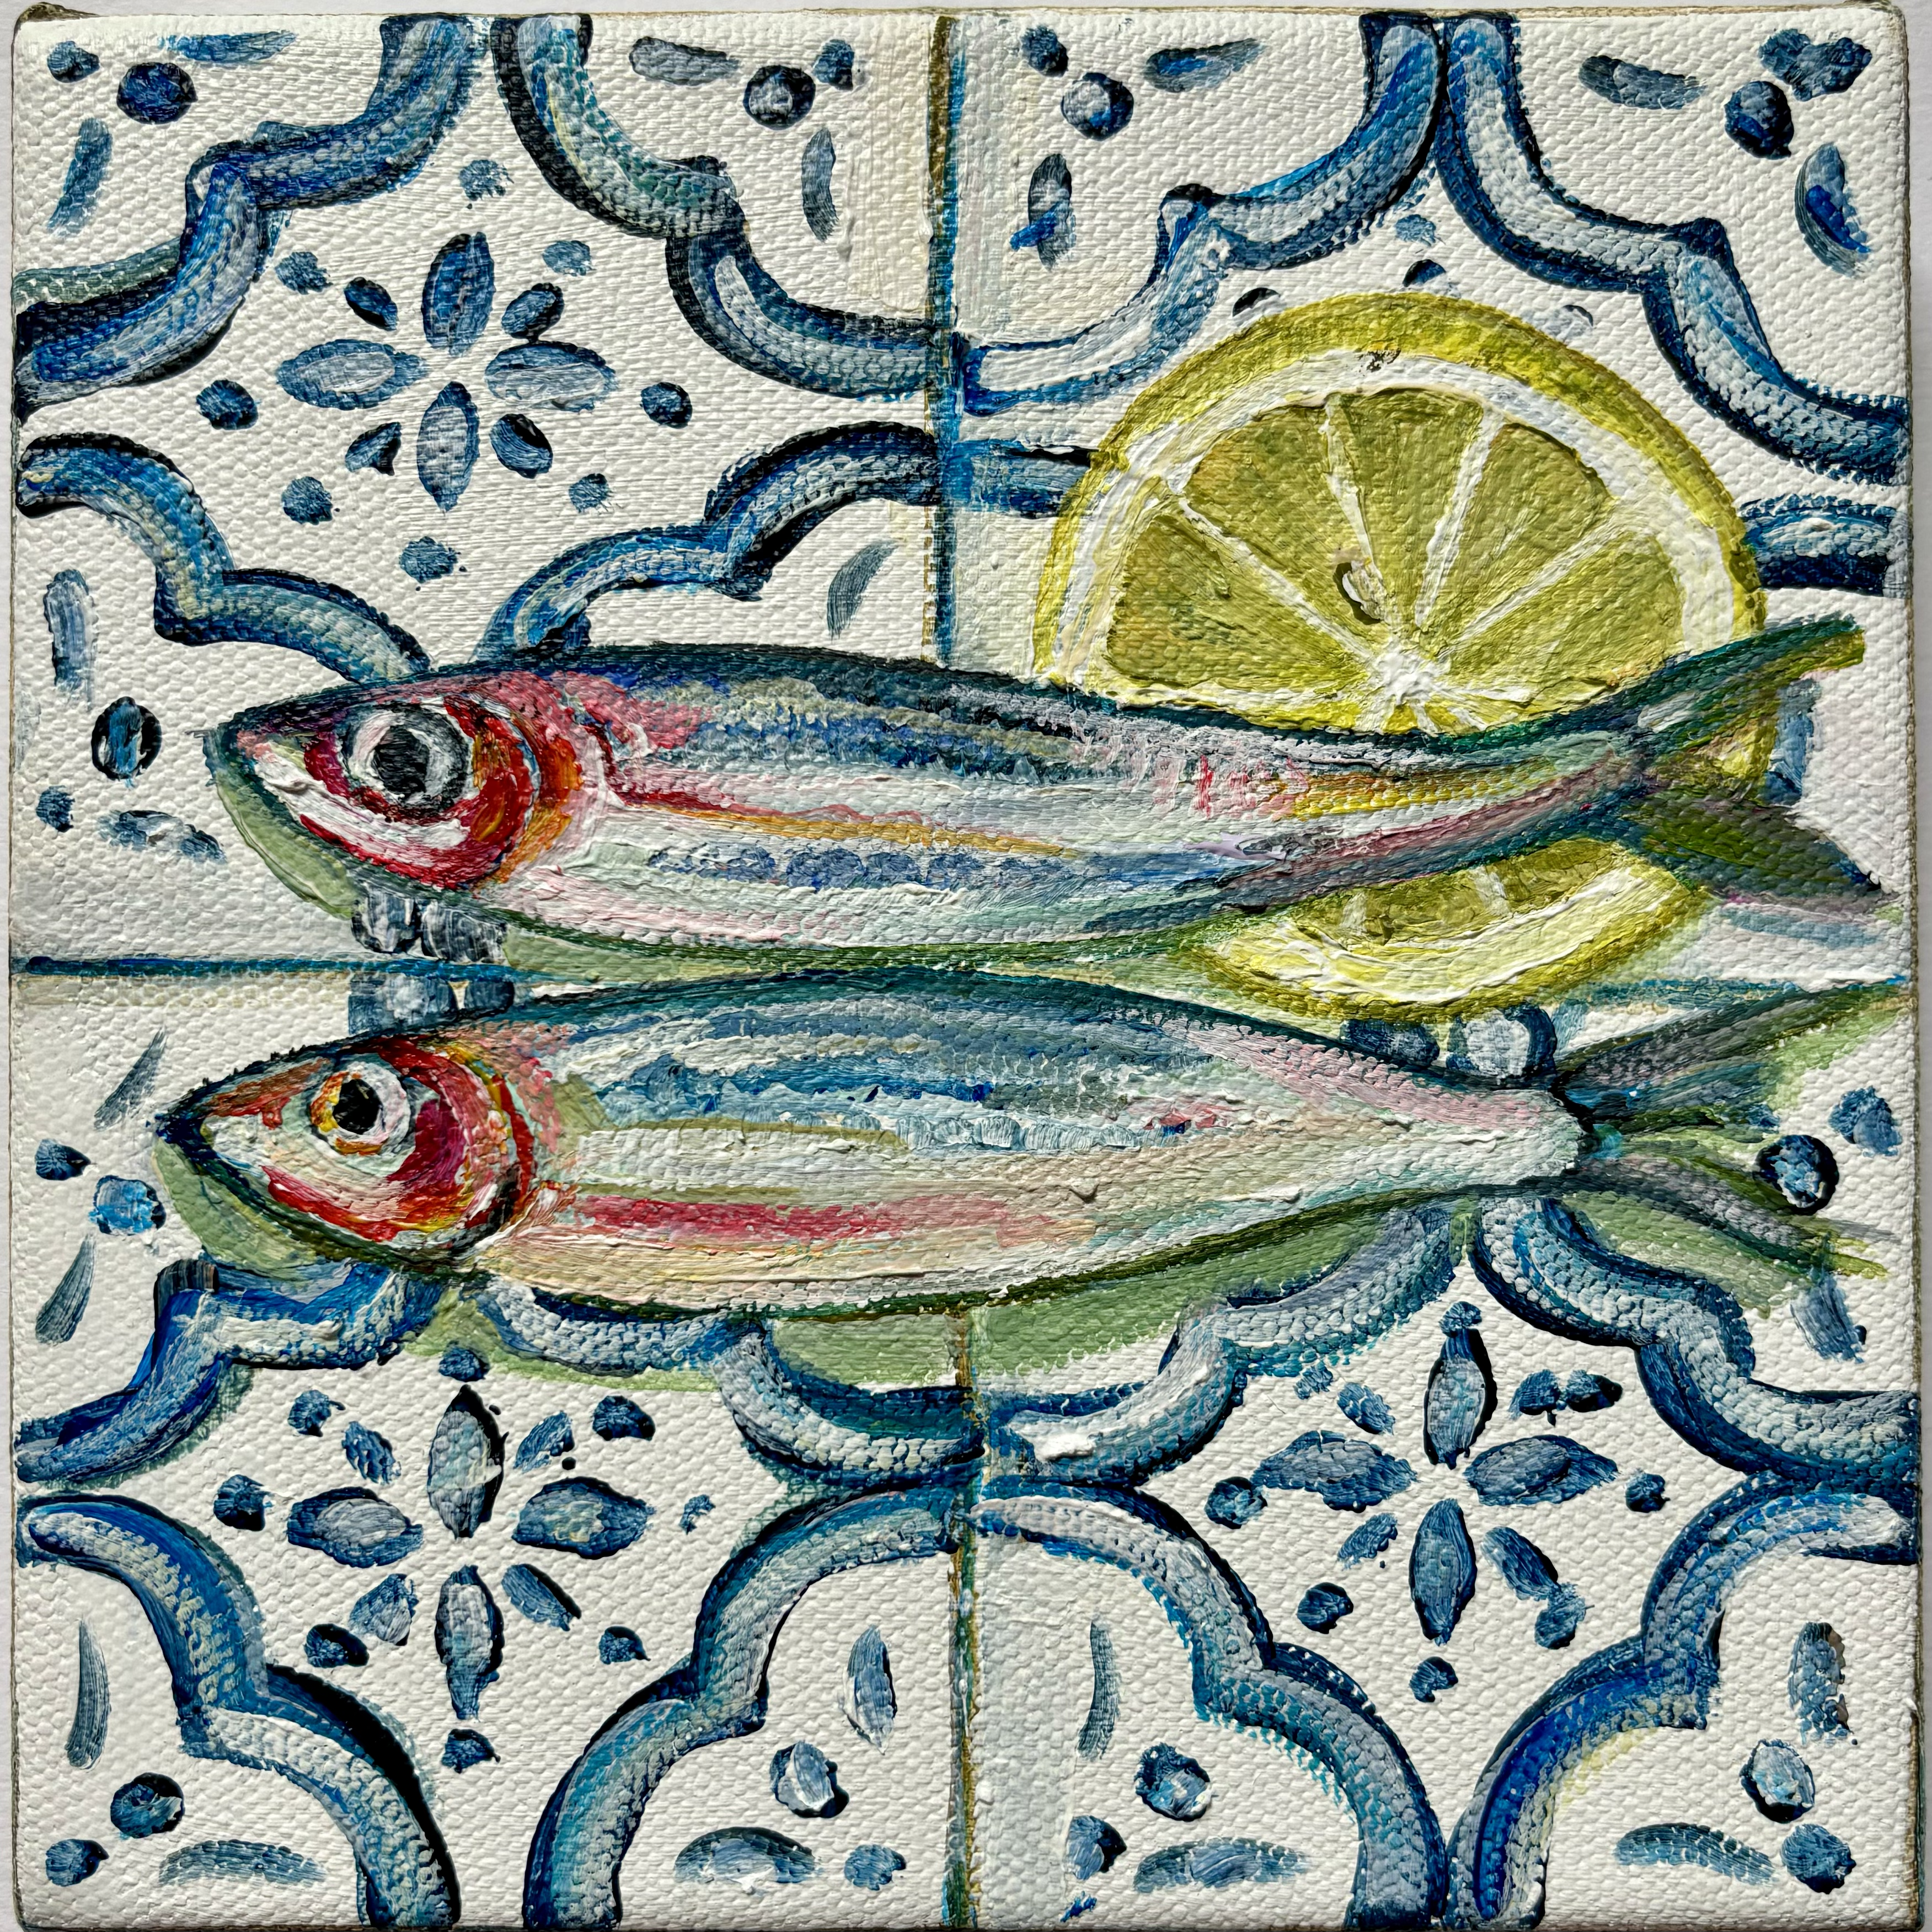 Sardines with Lemon by Pippa Smith